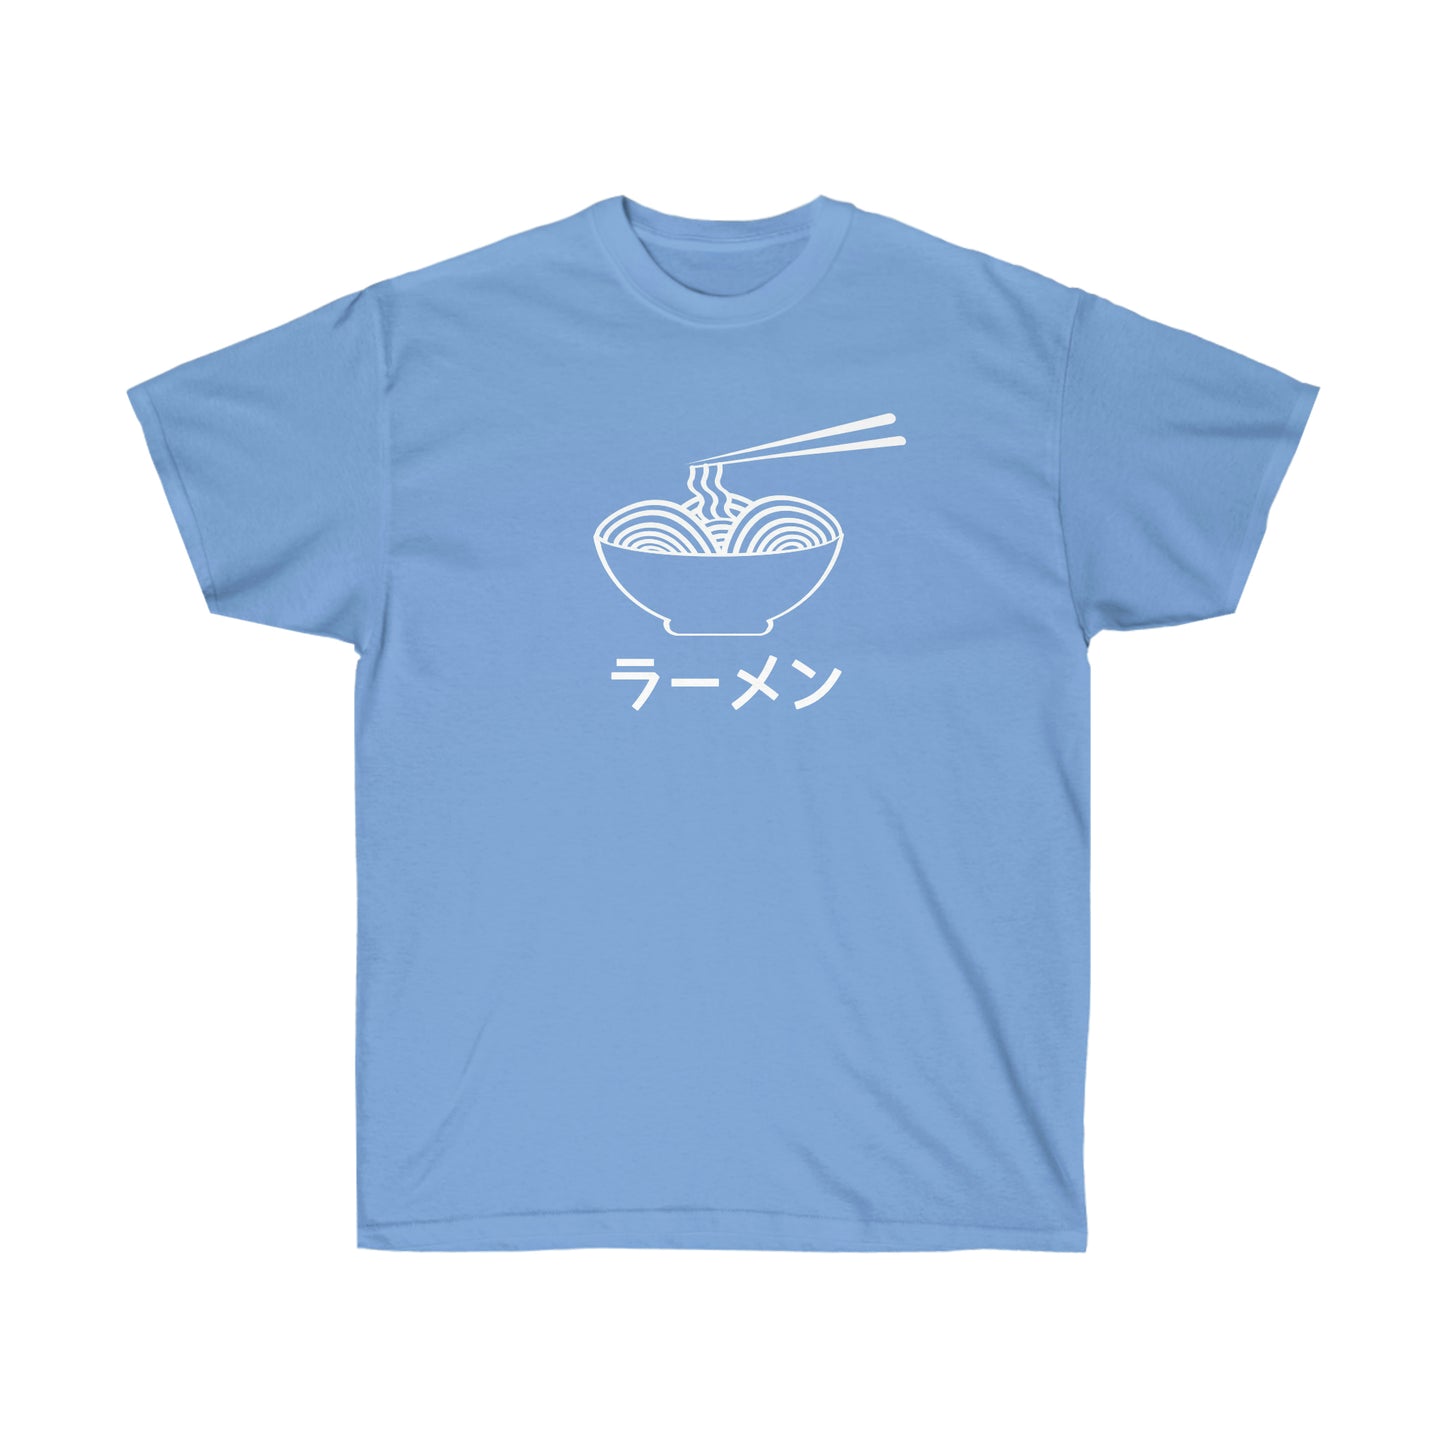 Ramen shirt Ramen Tee Noodle Shirts Japan Anime Shirt Foodie Unisex Japanese Aesthetic shirt